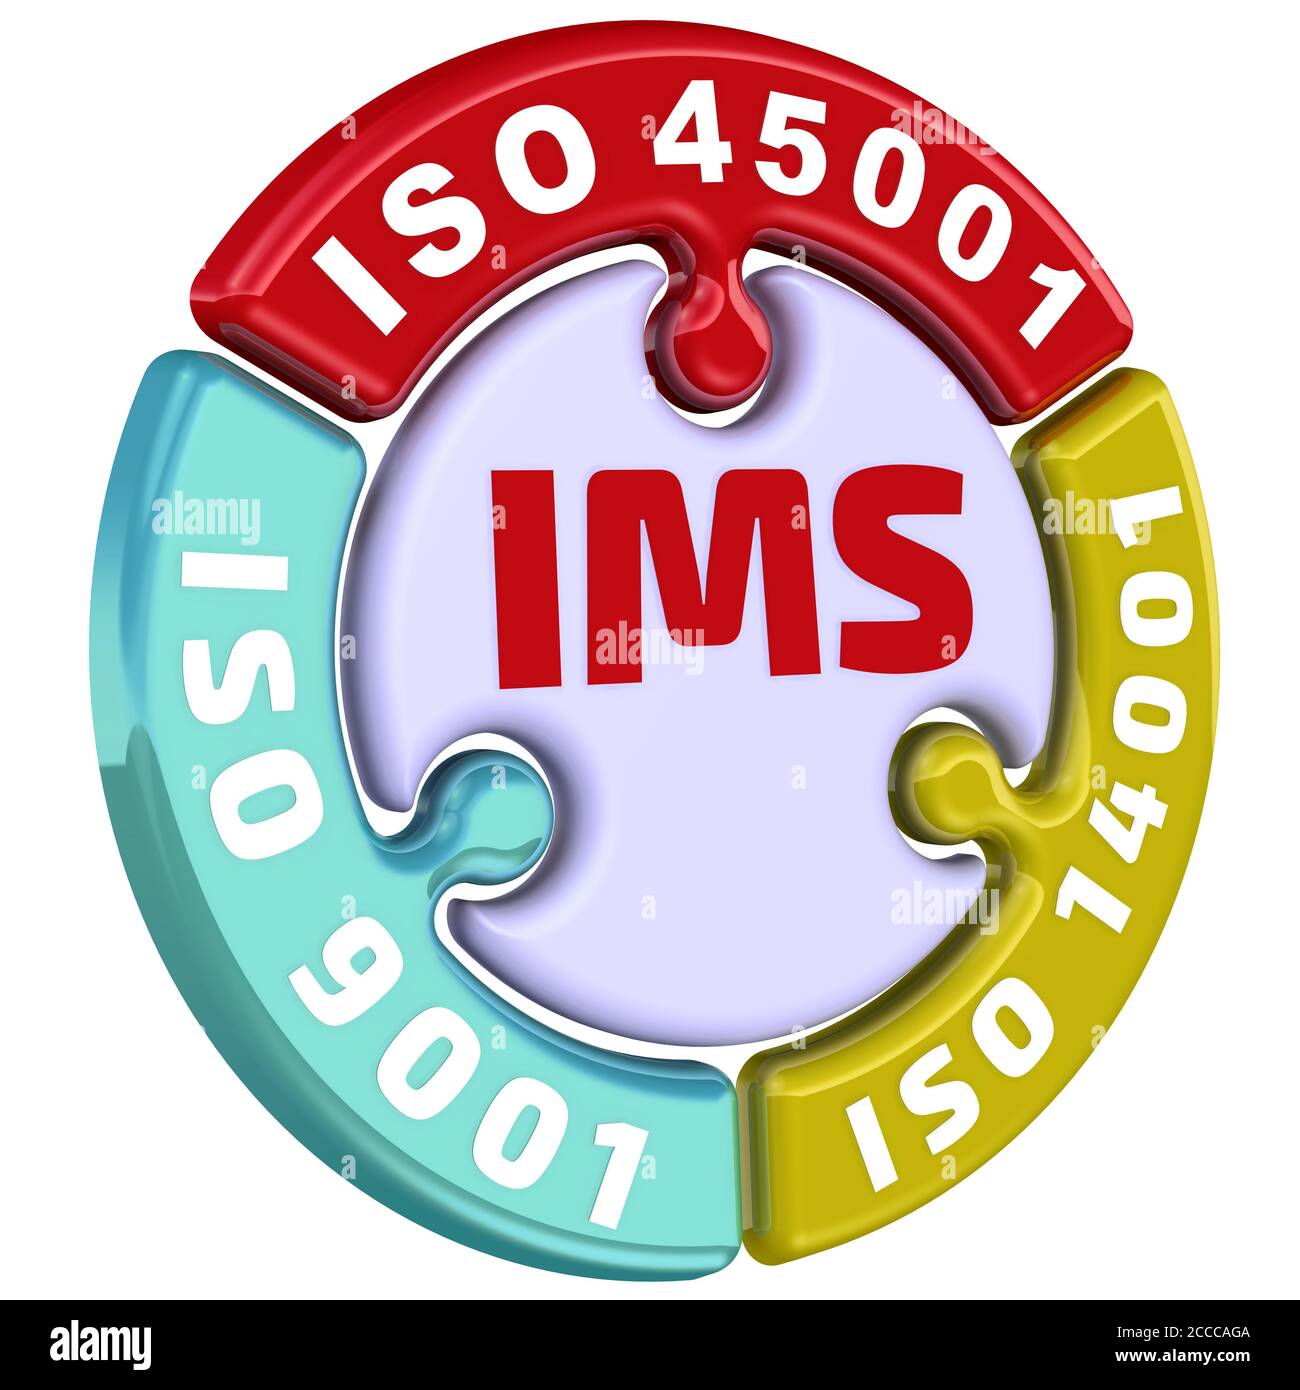 IMS. Integriertes ISO-Managementsystem. Die Inschrift IMS. ISO 9001, ISO 14001, ISO 45001 auf dem Puzzle in Form eines Kreises. 3D-Illustration Stockfoto